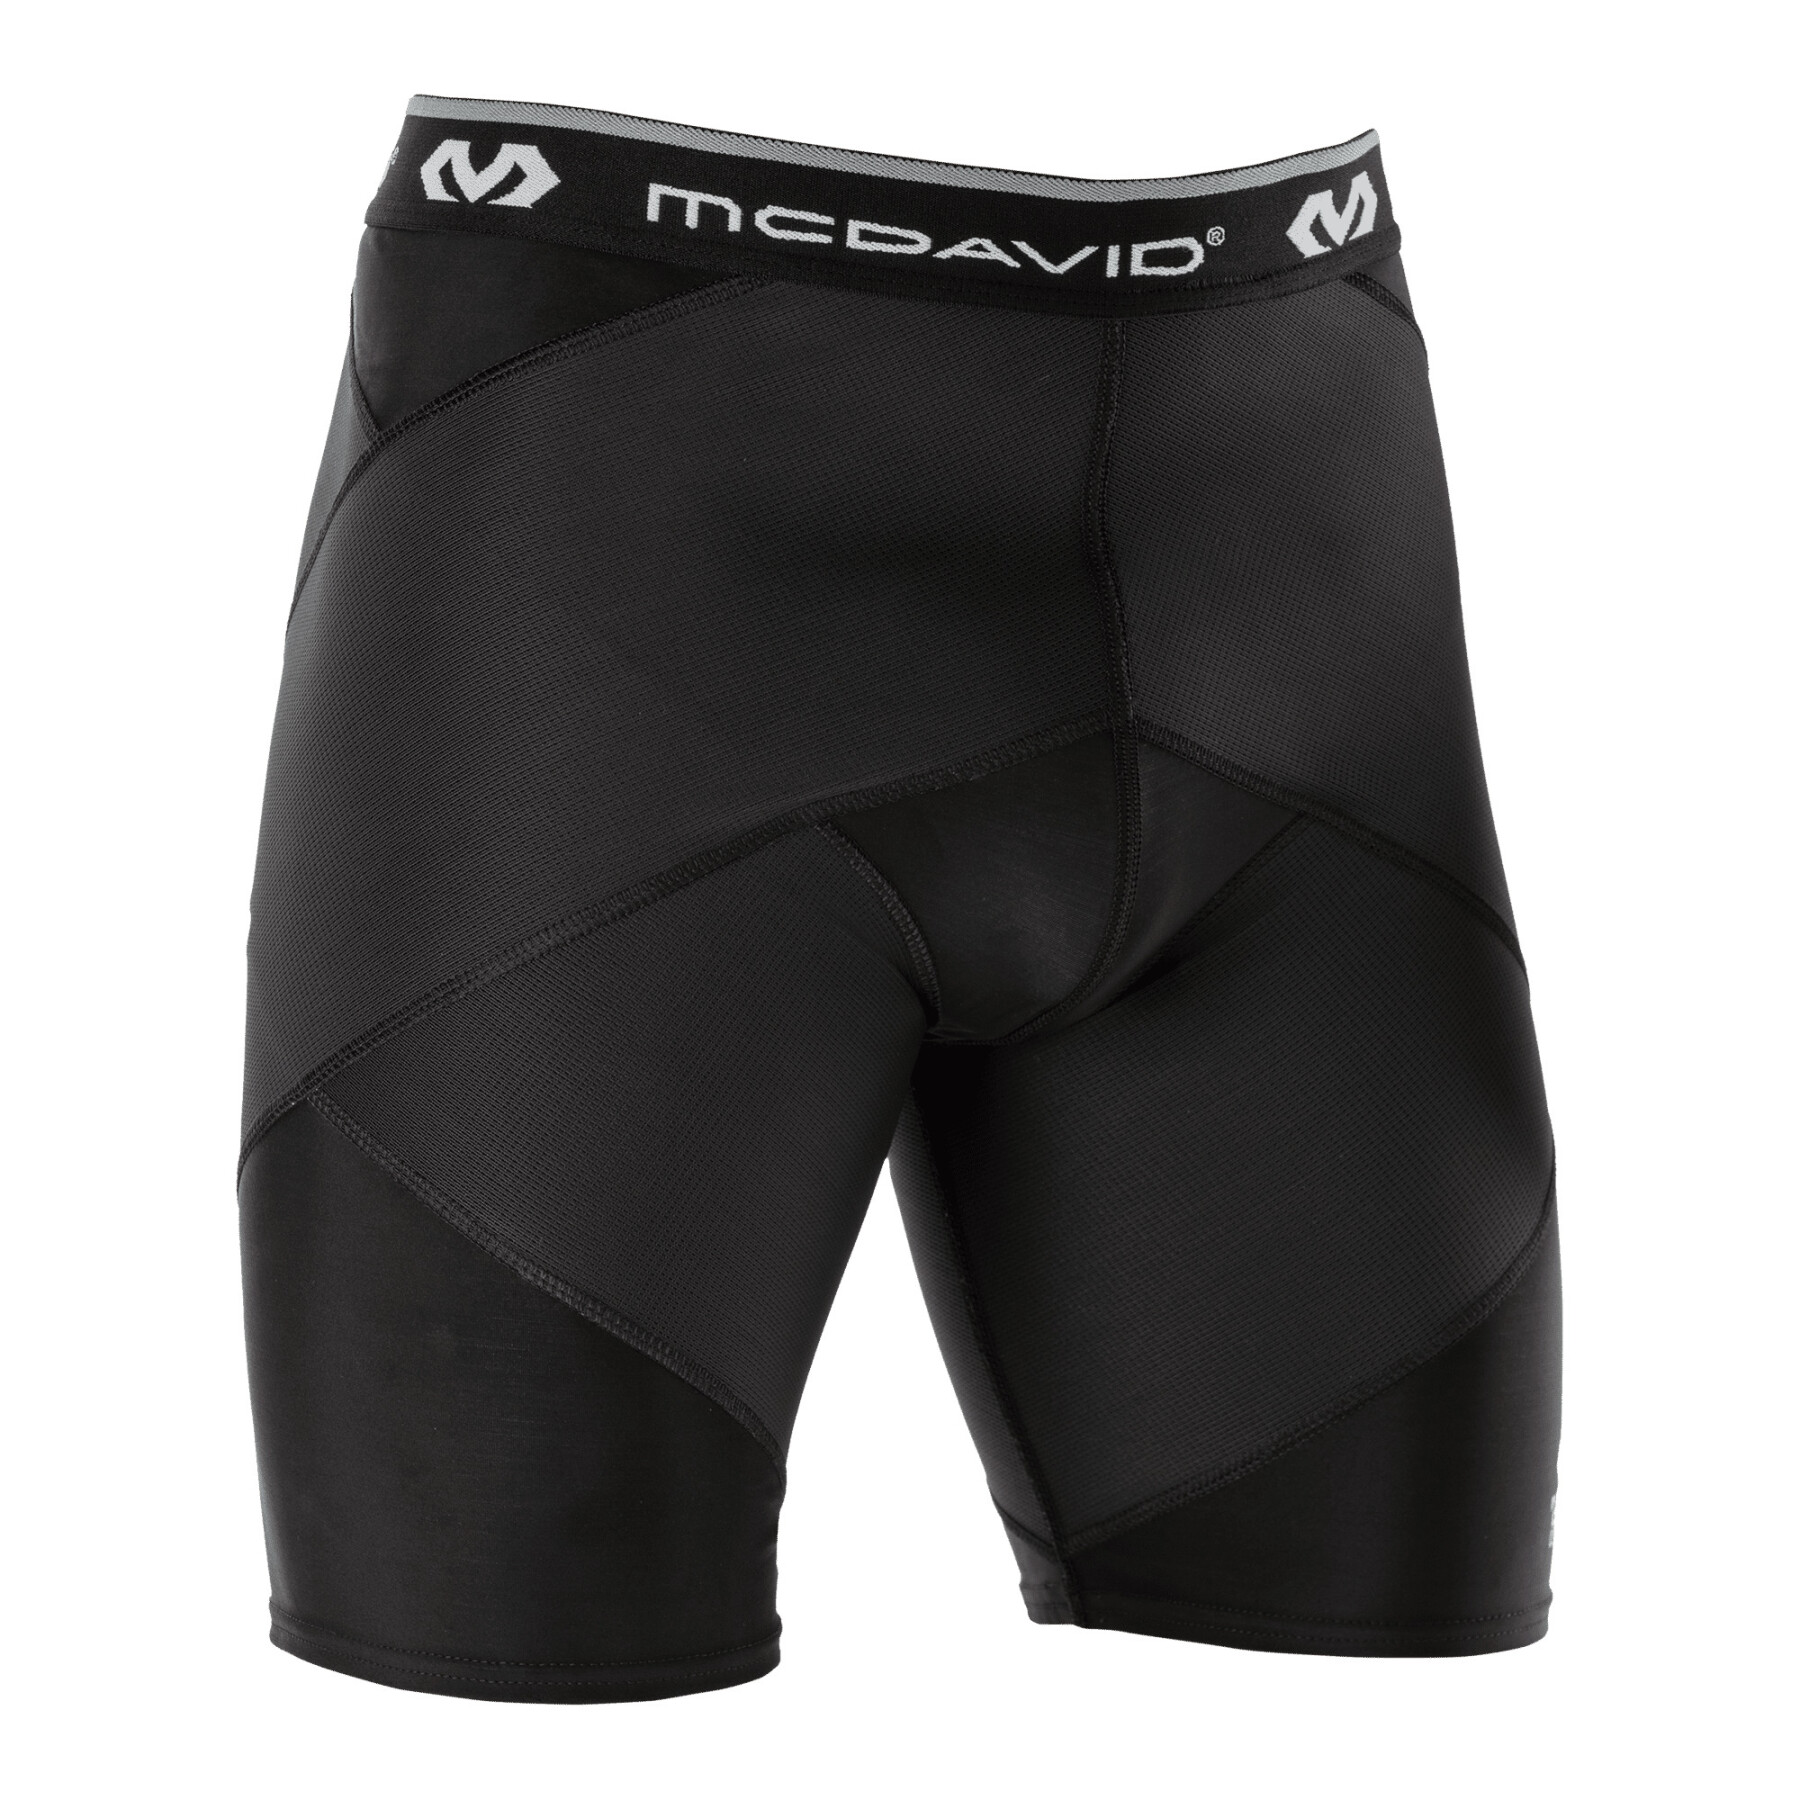 Compression shorts with spica hip McDavid Super Cross